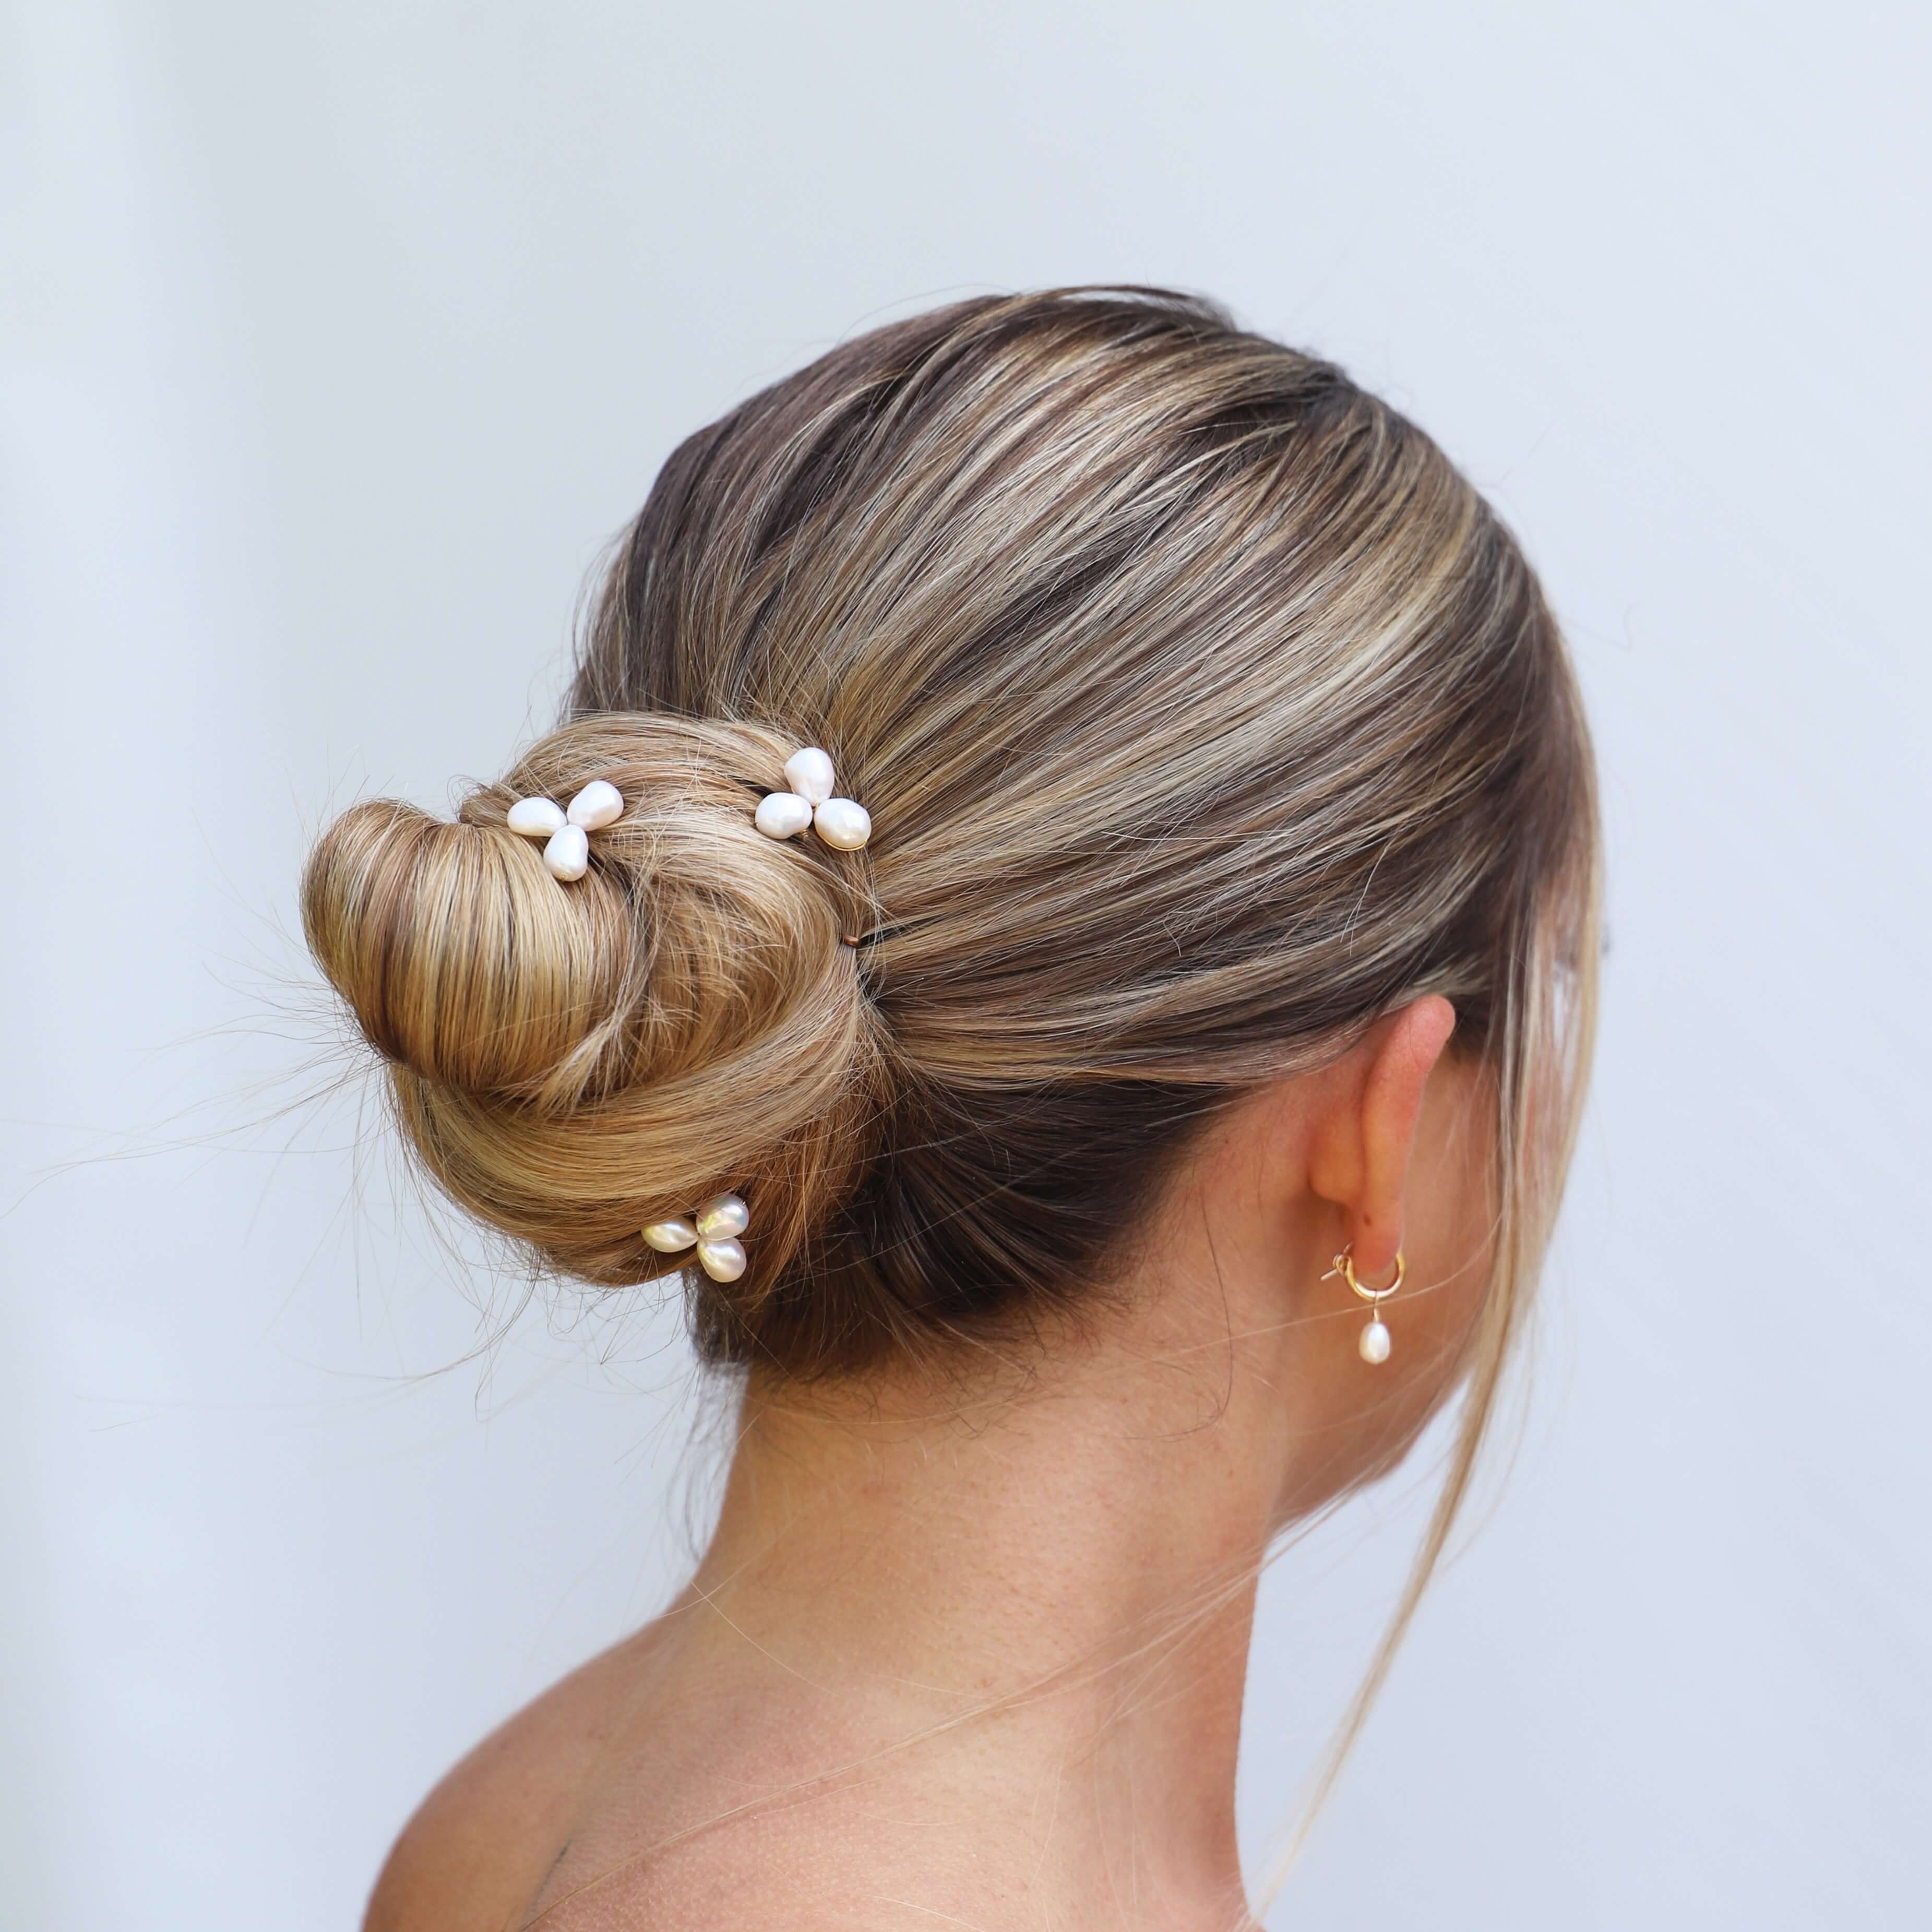 medium pearl cluster hair pins in hair on model hair up